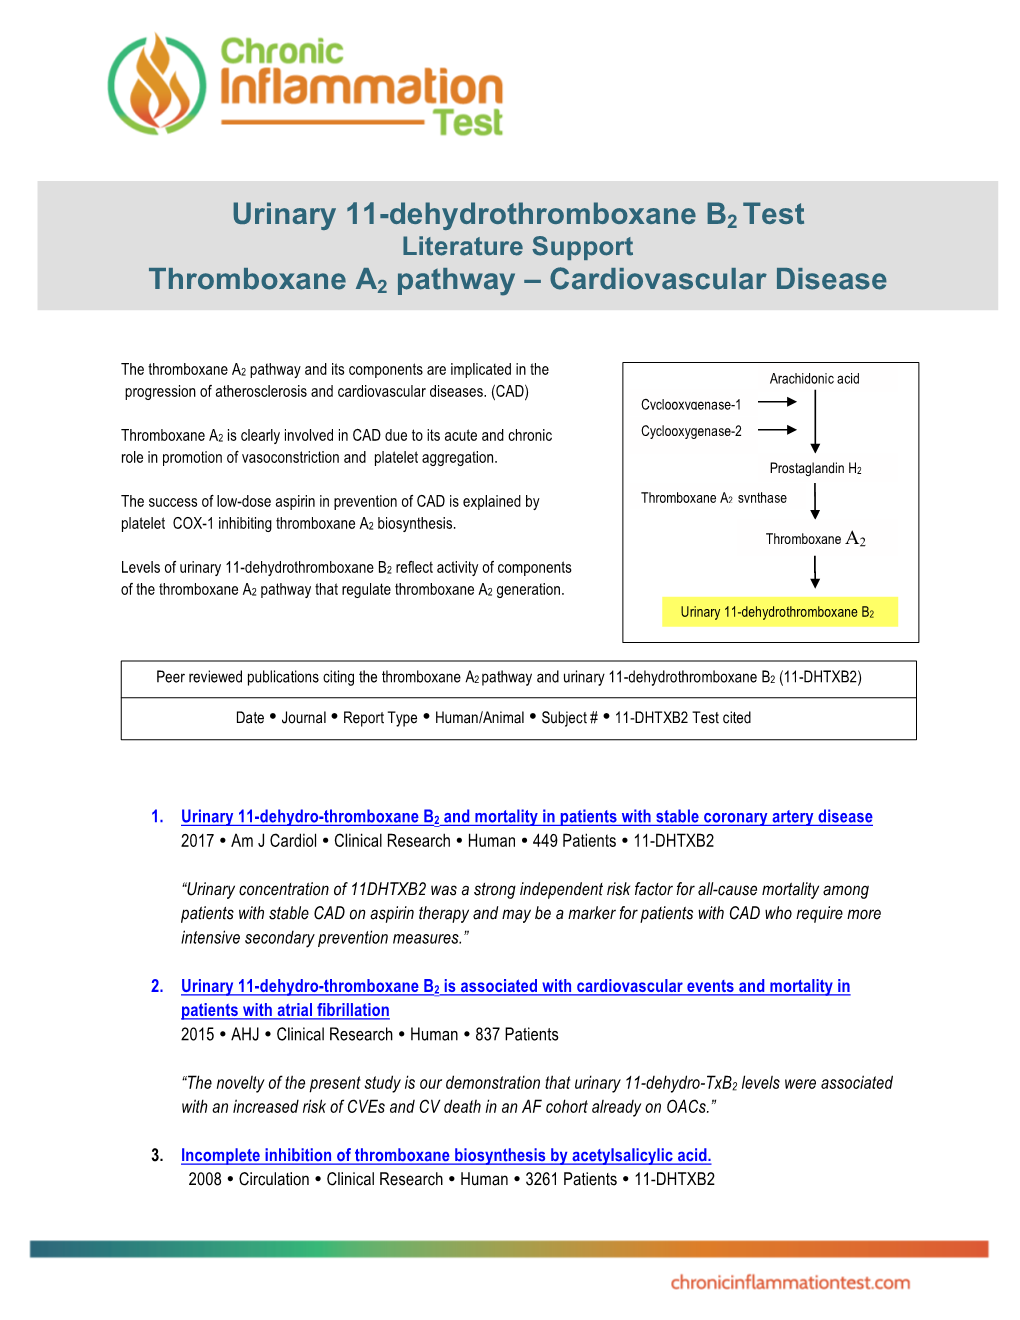 Urinary 11-Dehydrothromboxane B2 Test Thromboxane A2 Pathway